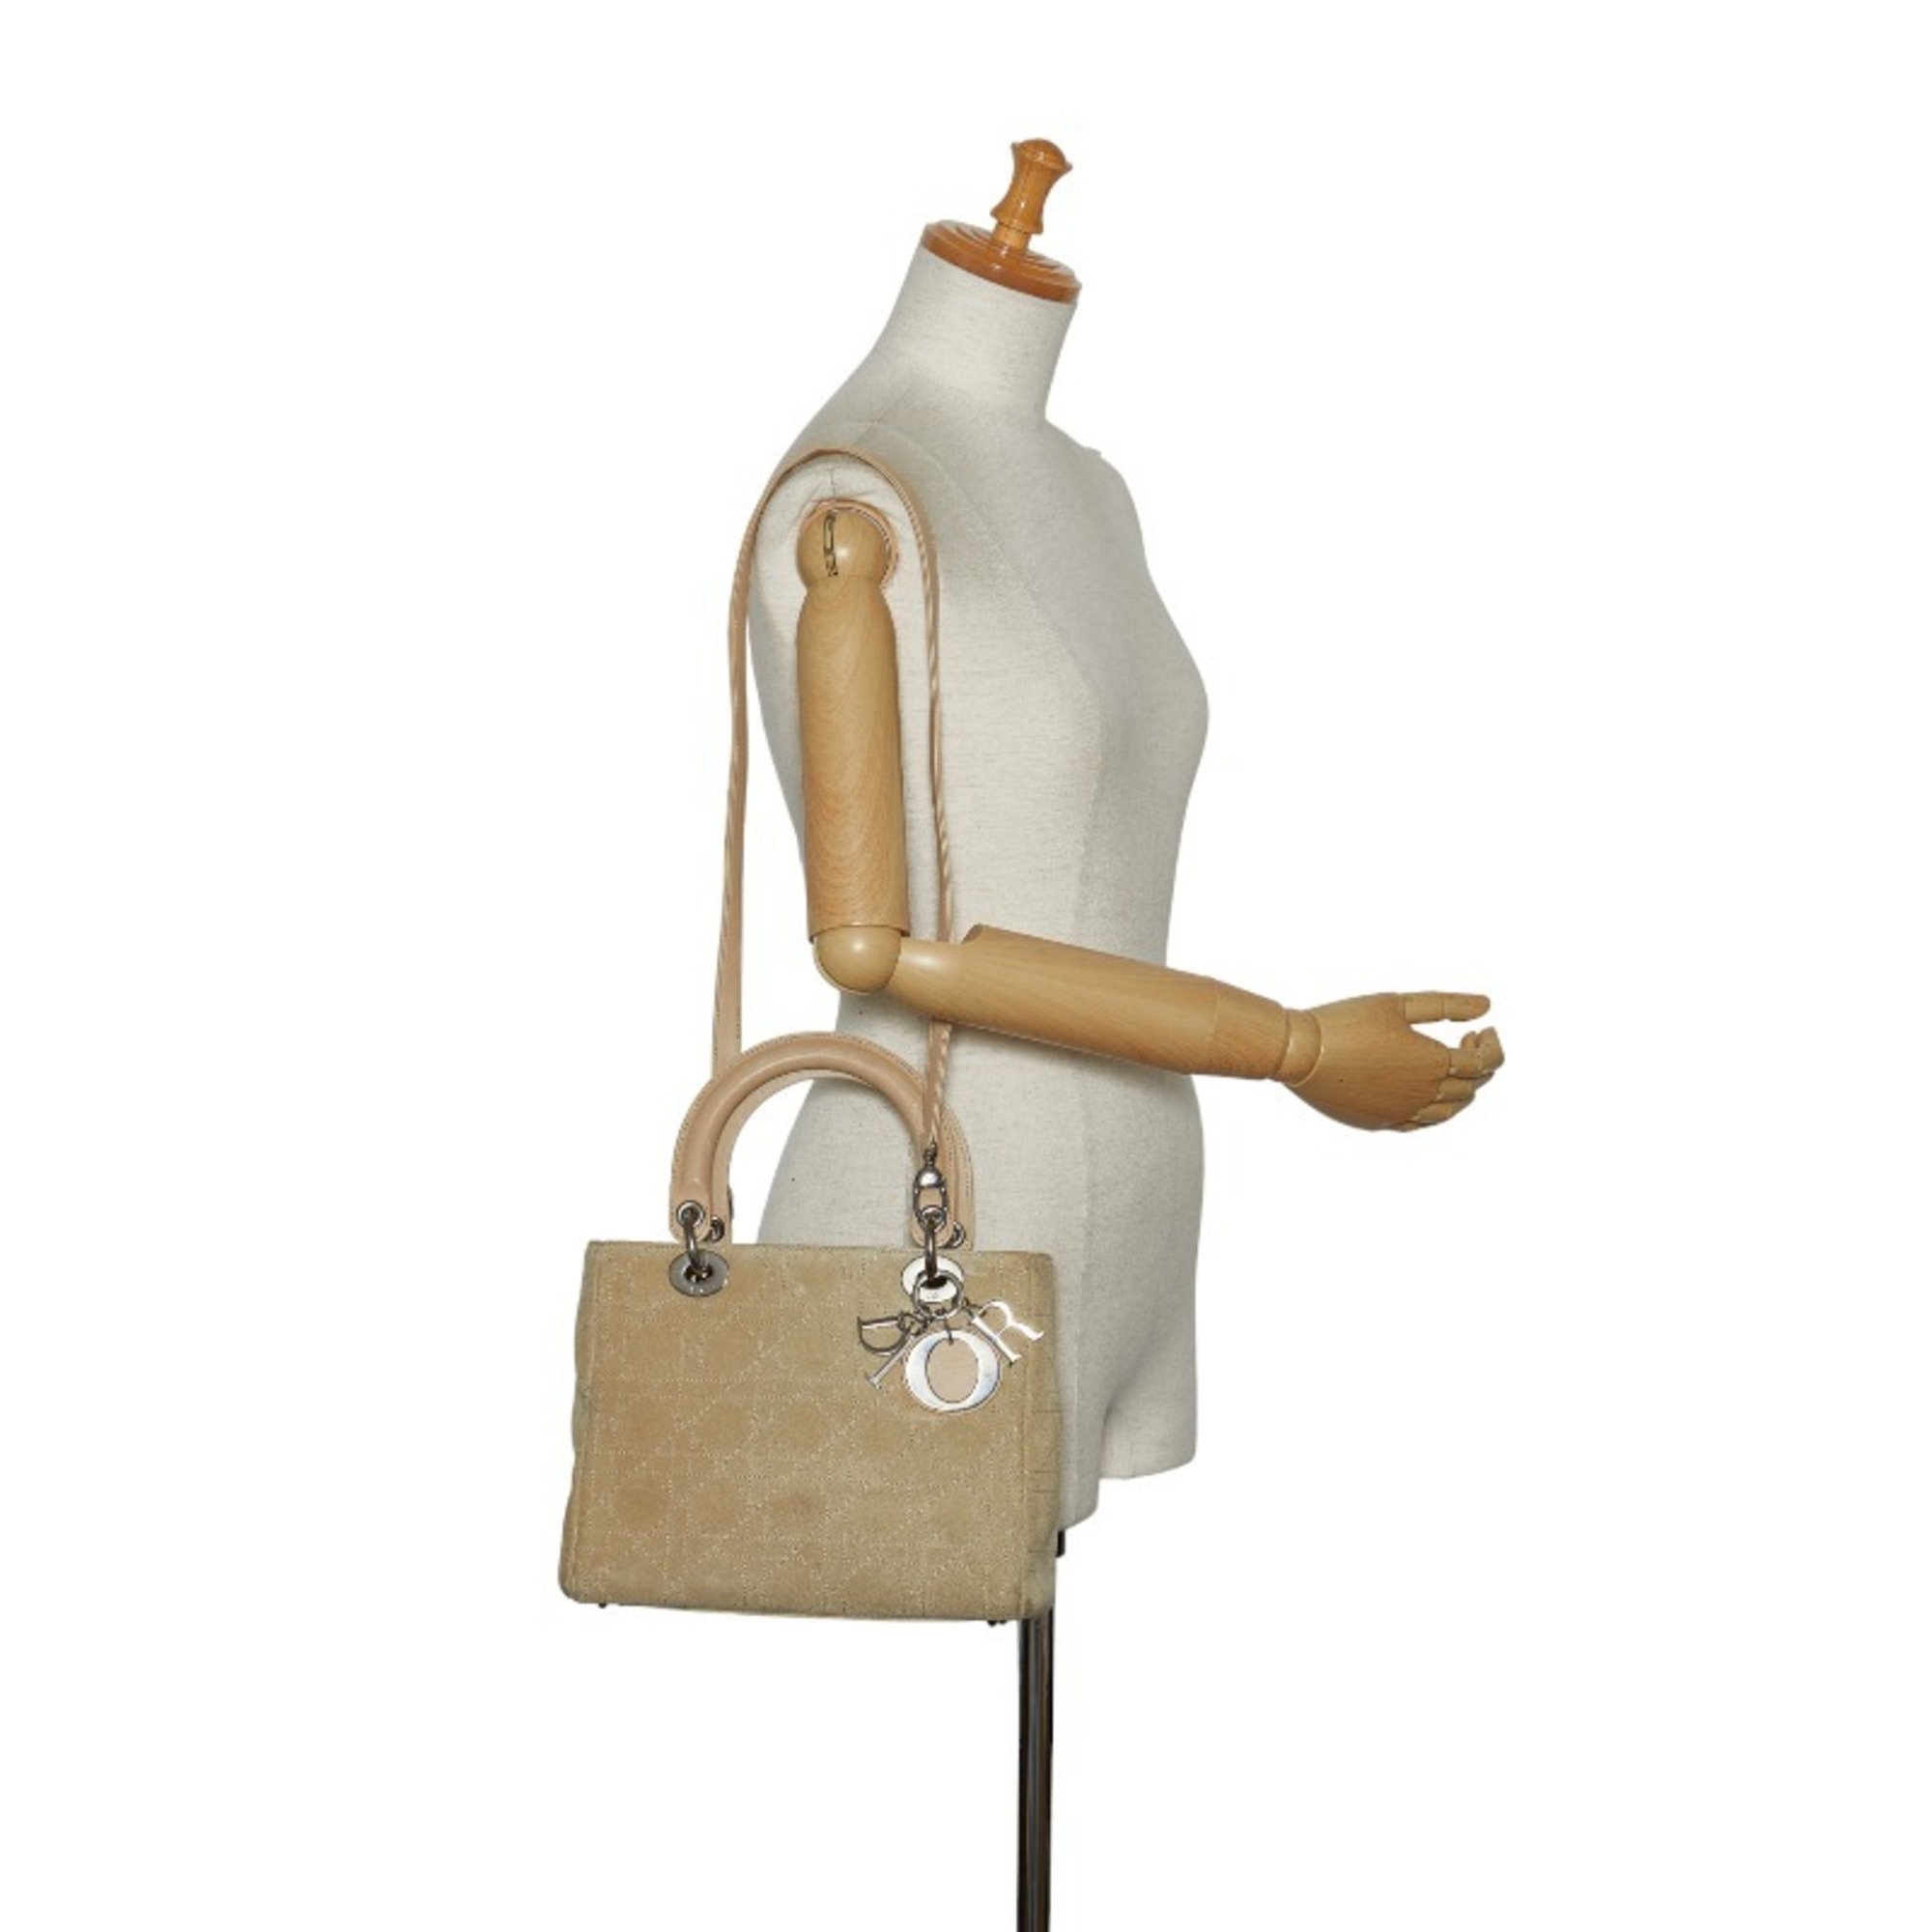 Christian Dior Dior Lady Handbag Shoulder Bag Beige Suede Ladies